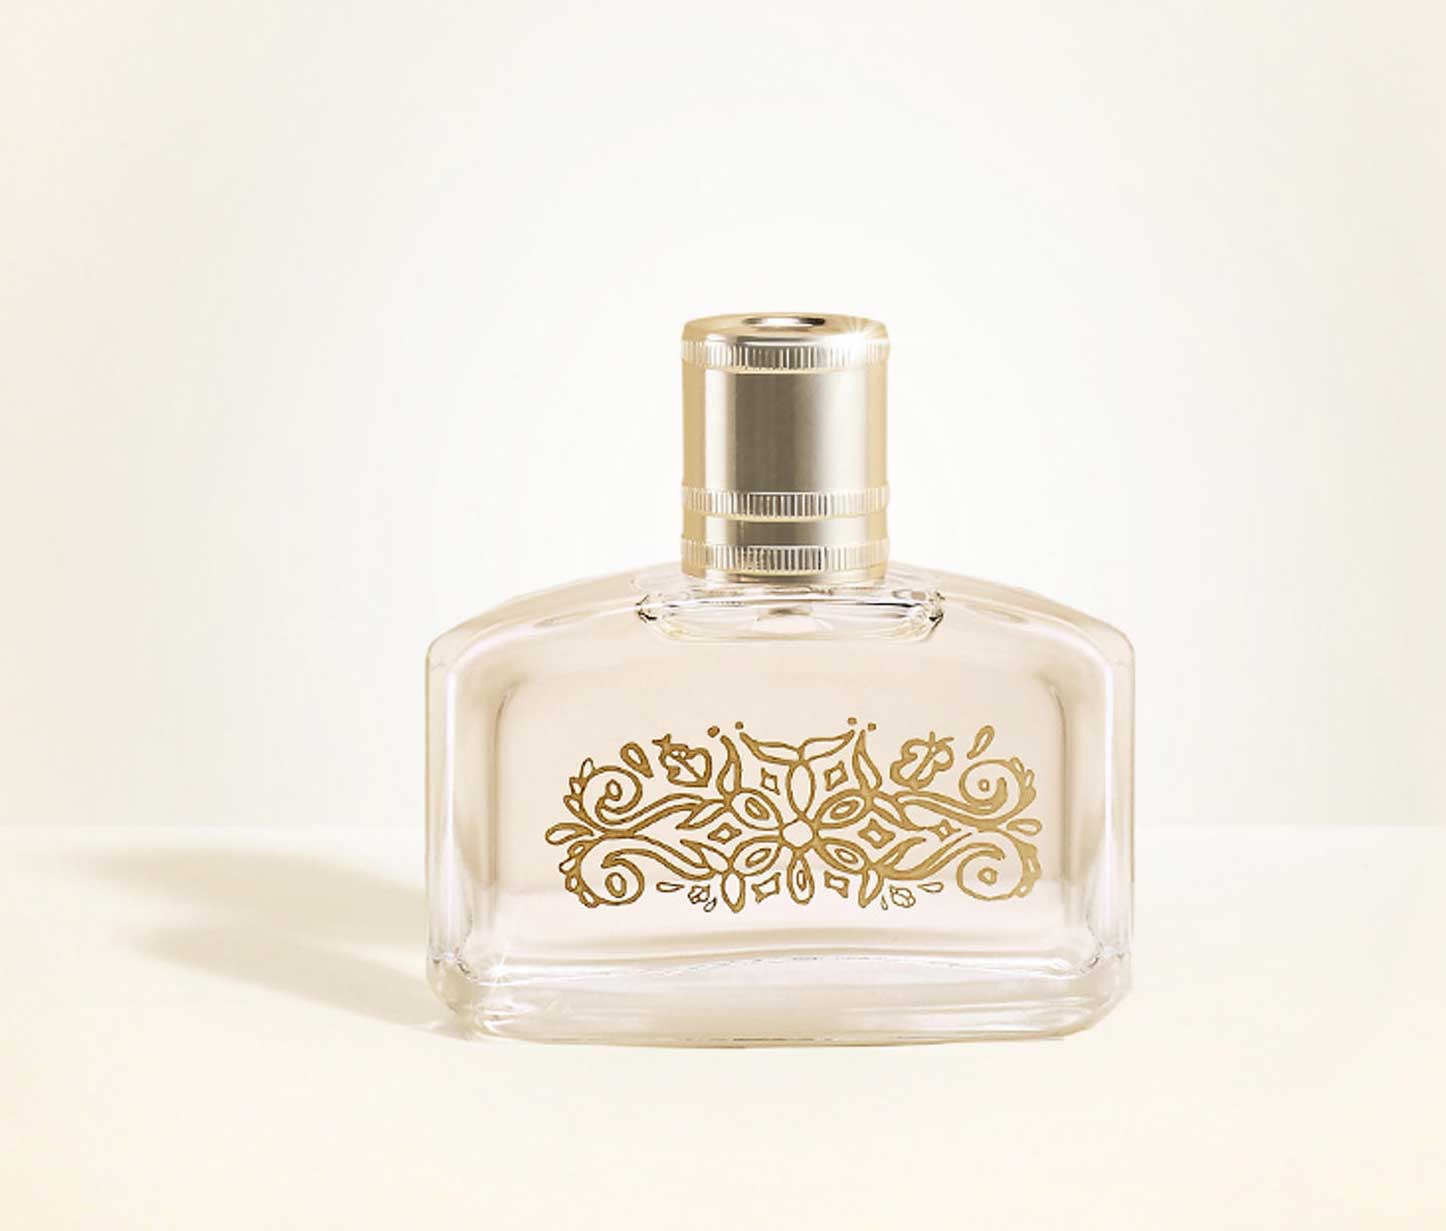 Sol Dreamer Hollister perfume - a 